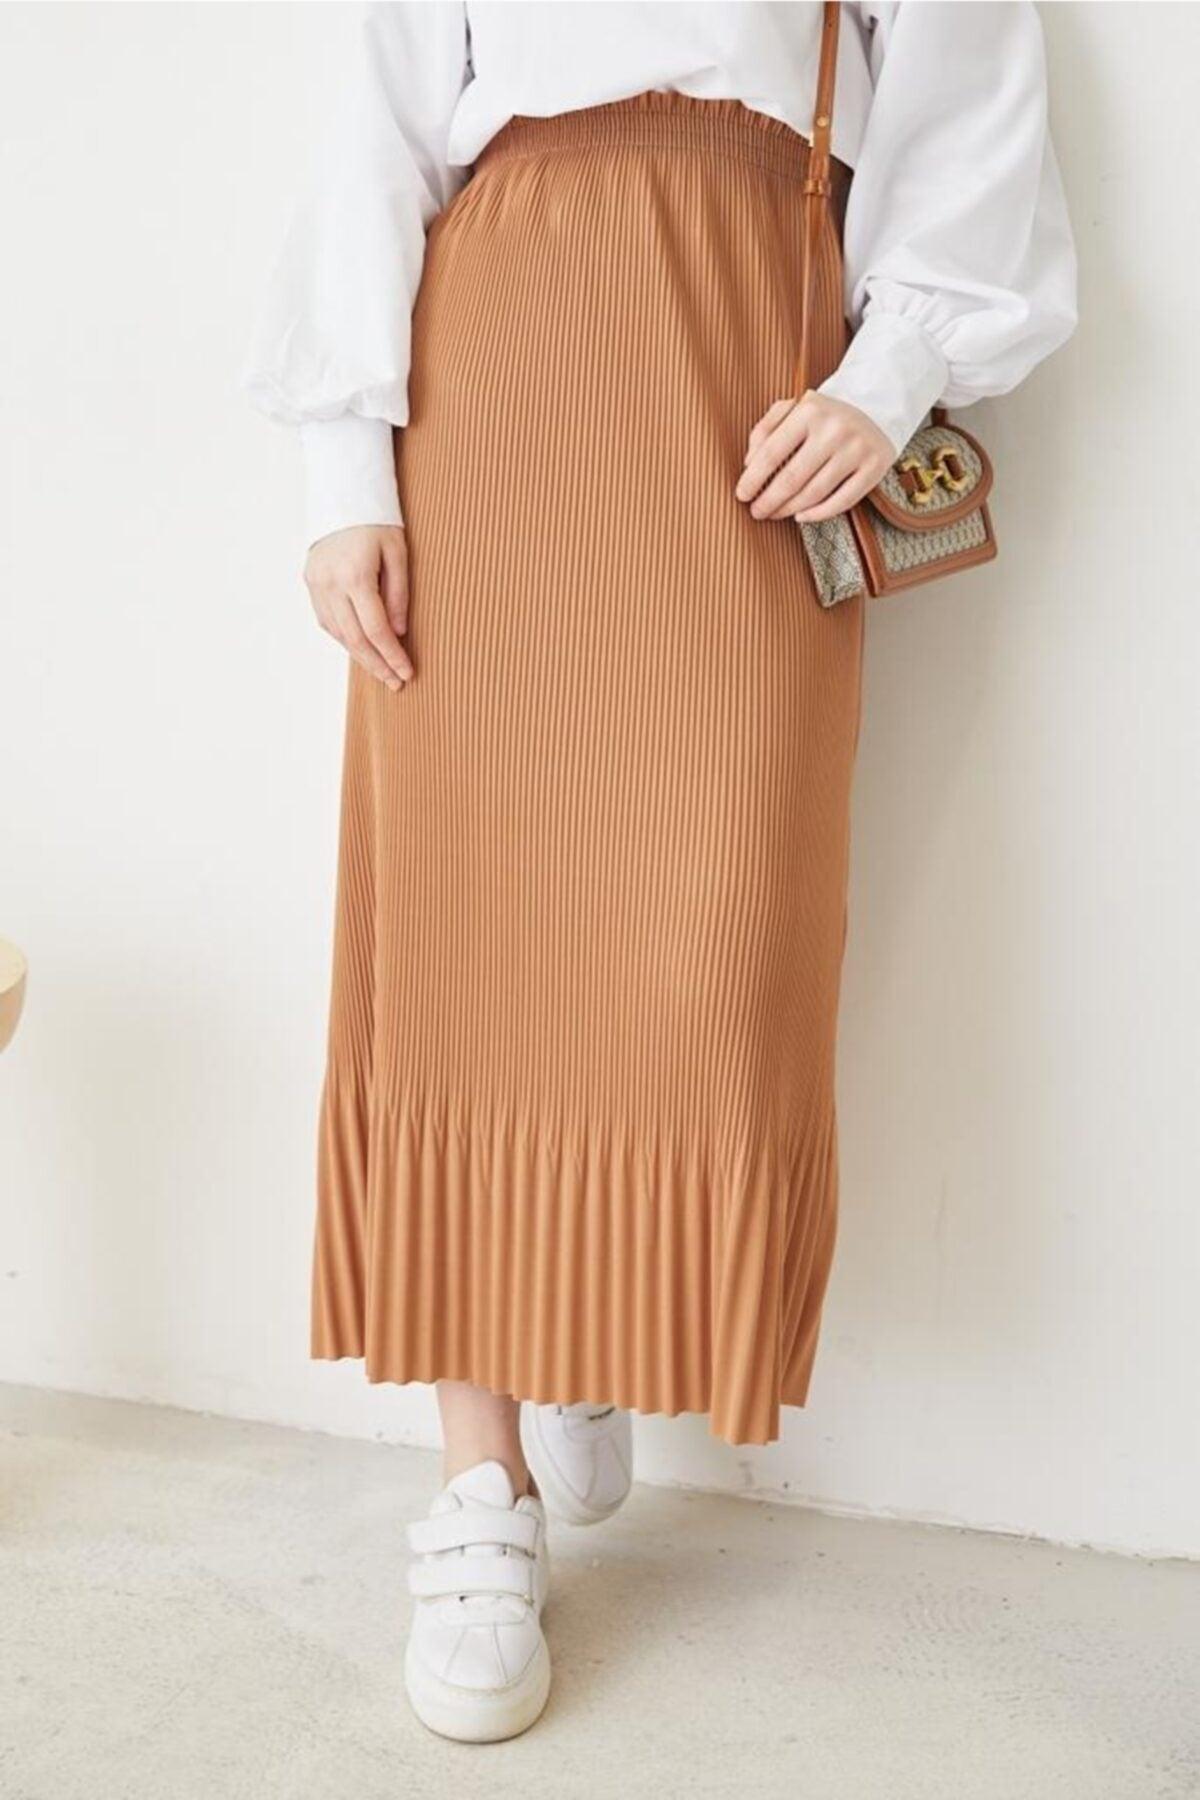 205 - Pi?li?flood? Hijab Skirt - Swordslife